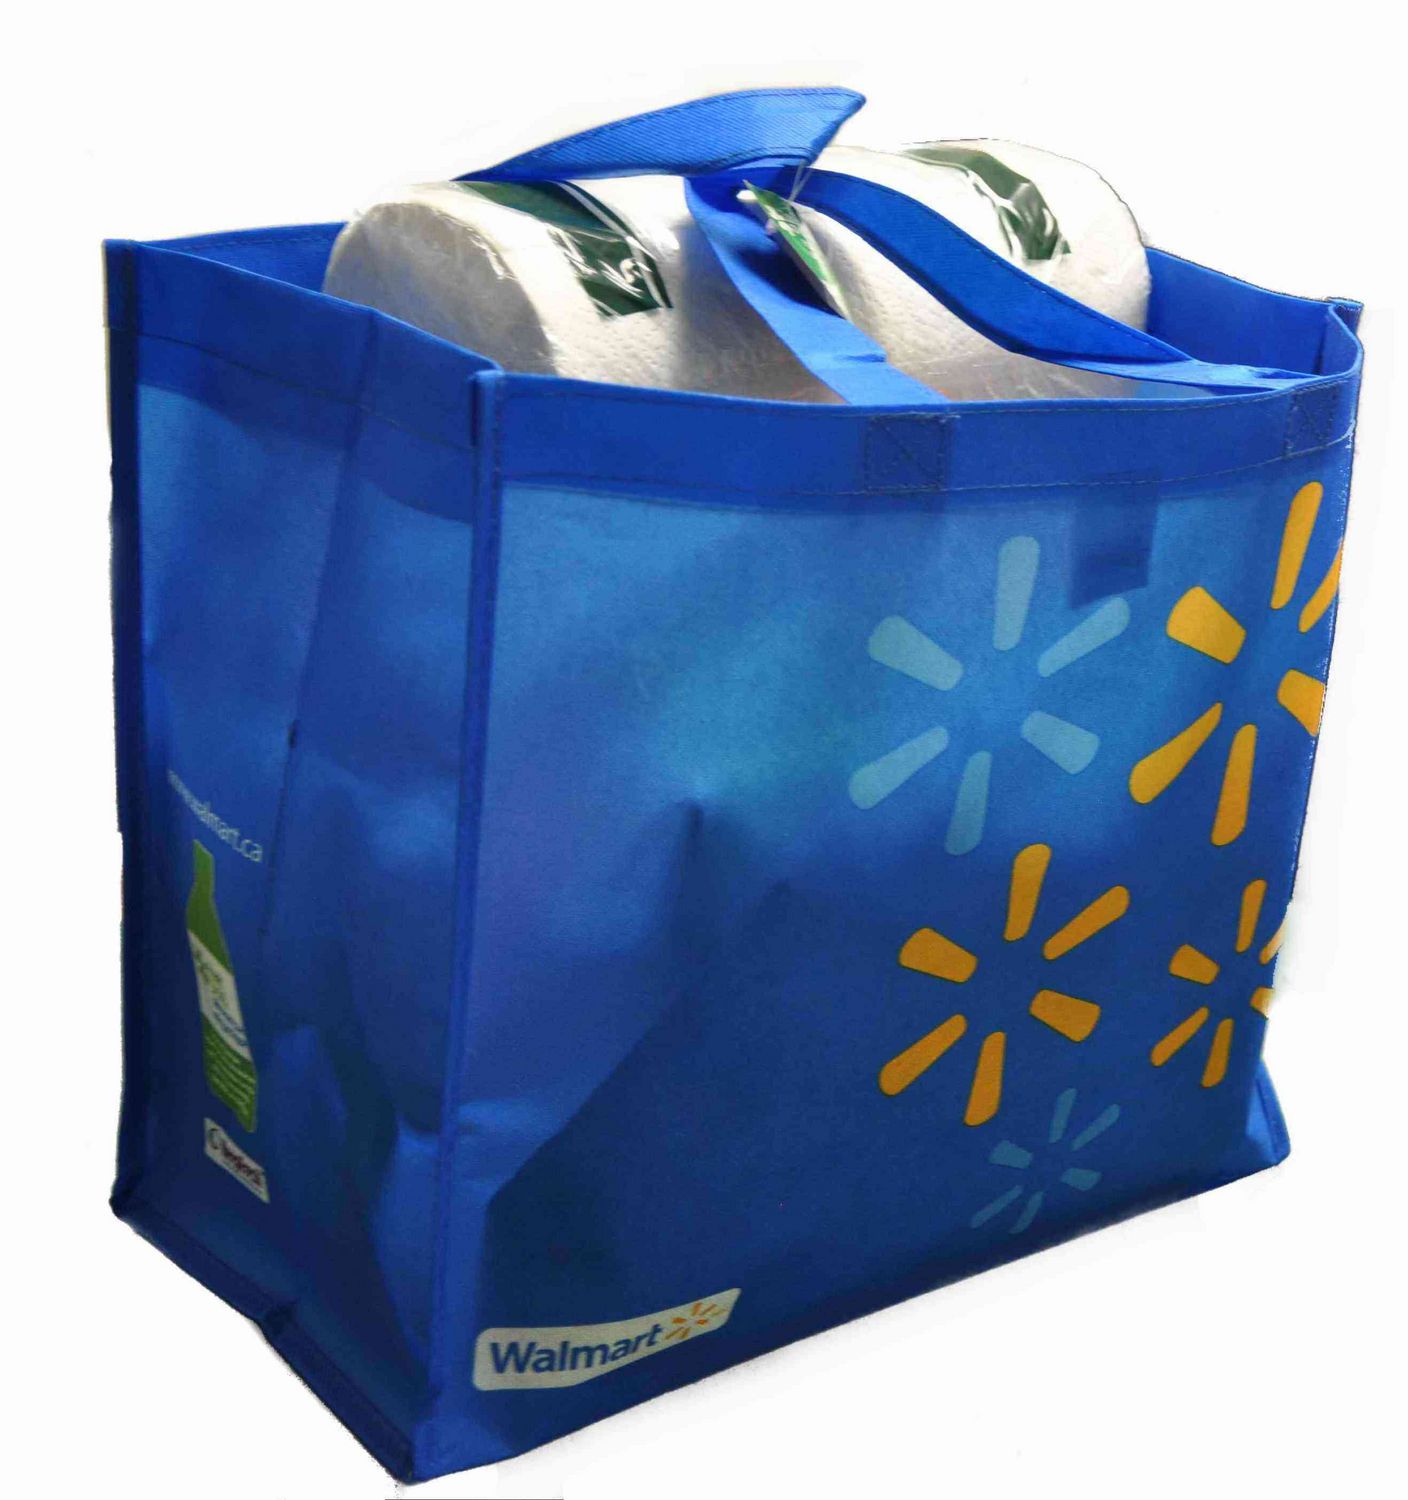 Walmart Iconic Reusable Shopping Bag Walmart Canada